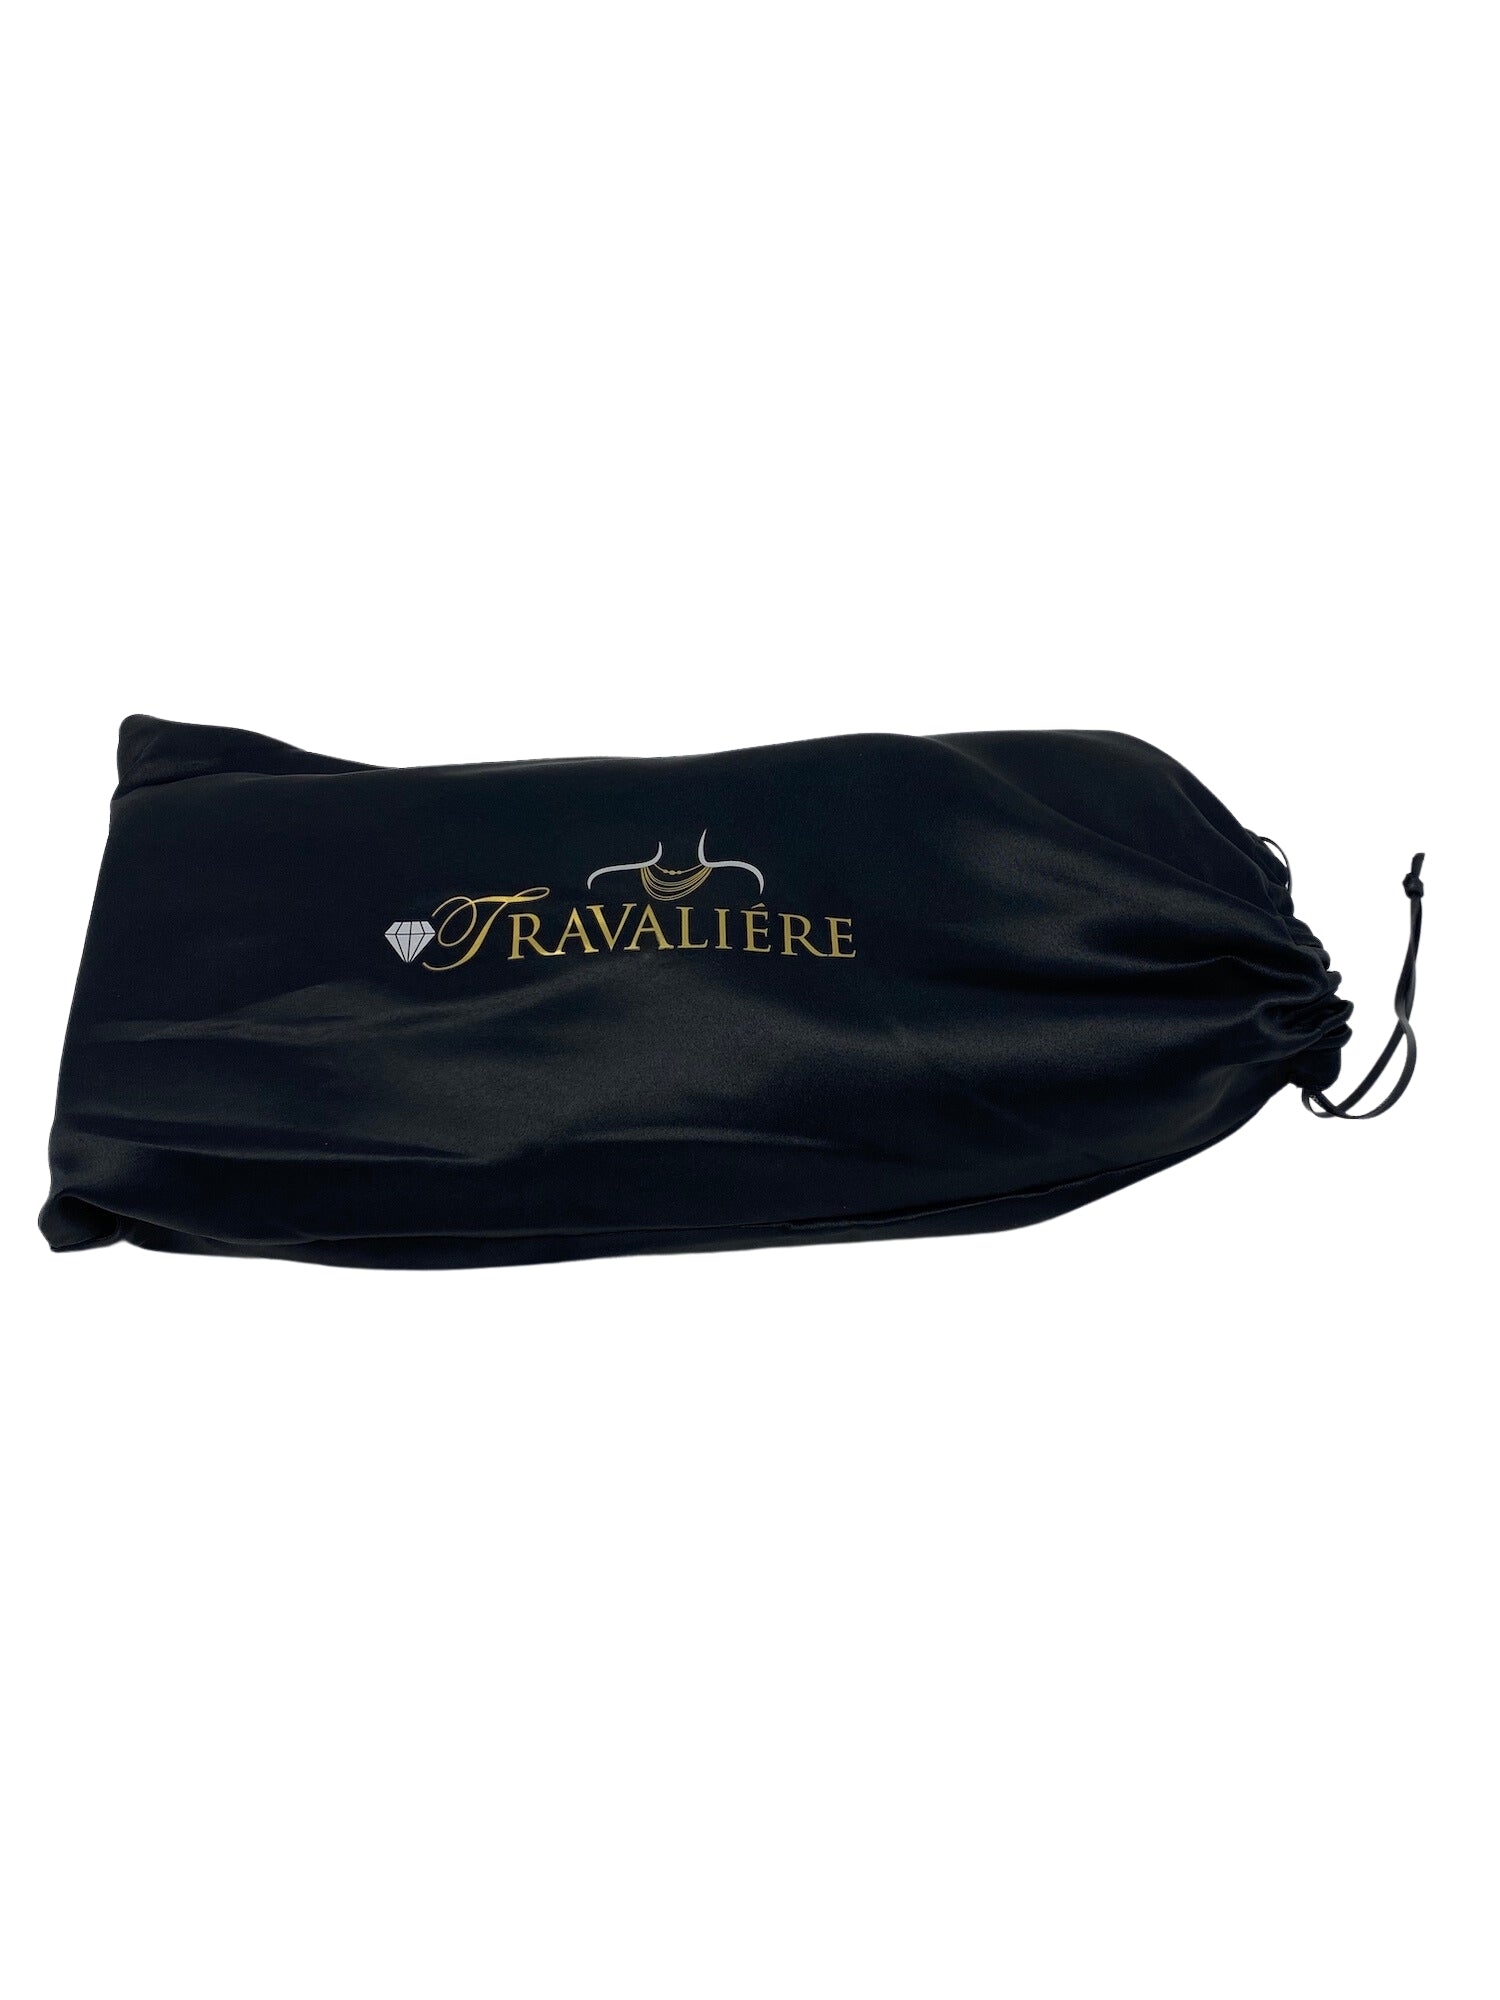 Classic Black Travaliere Handbag | Best Way to Travel & Store Your Jewelry